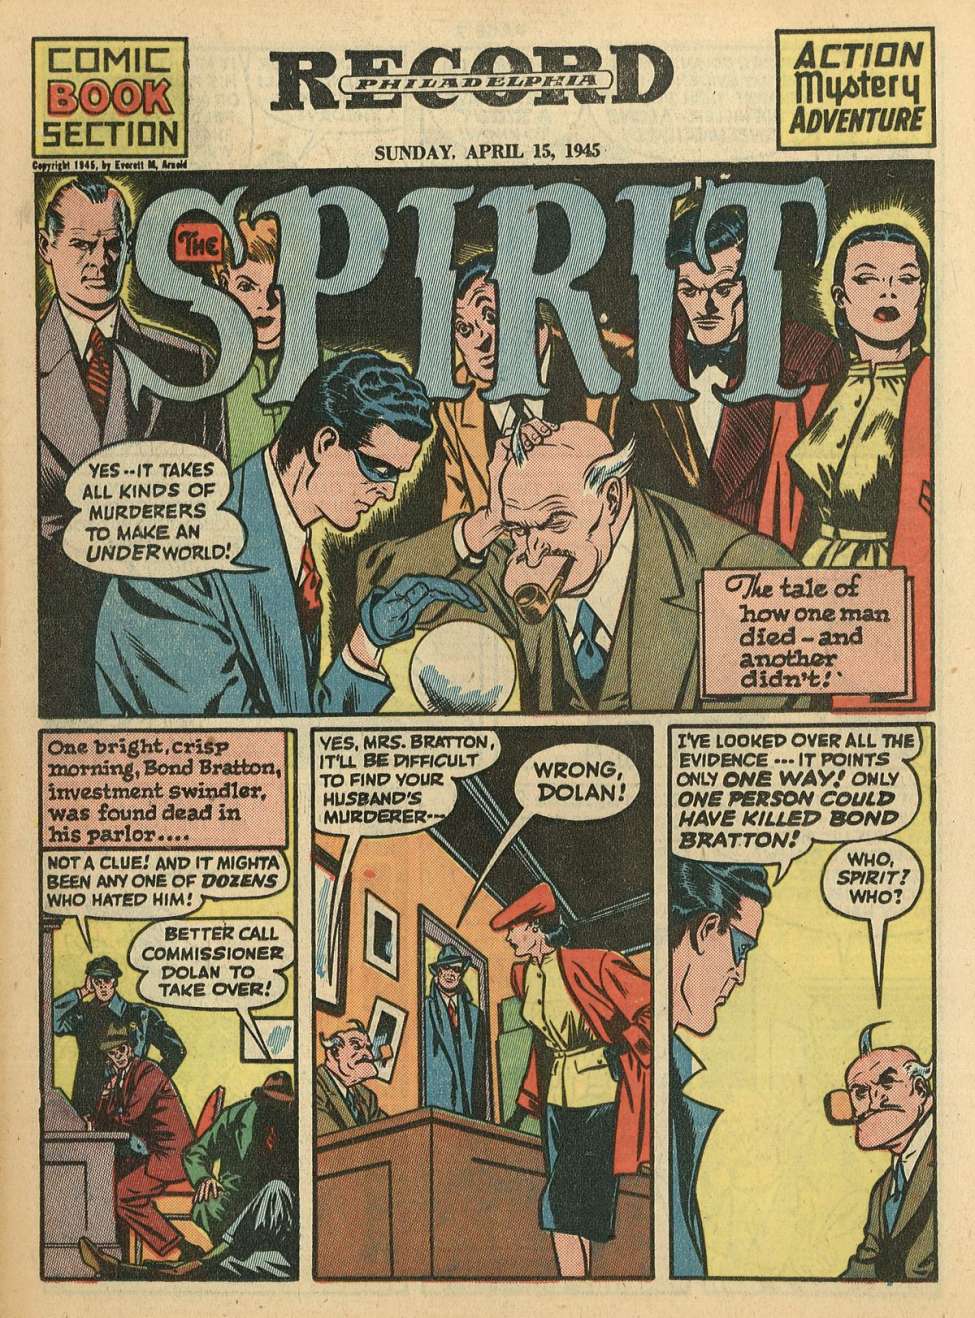 Comic Book Cover For The Spirit (1945-04-15) - Philadelphia Record